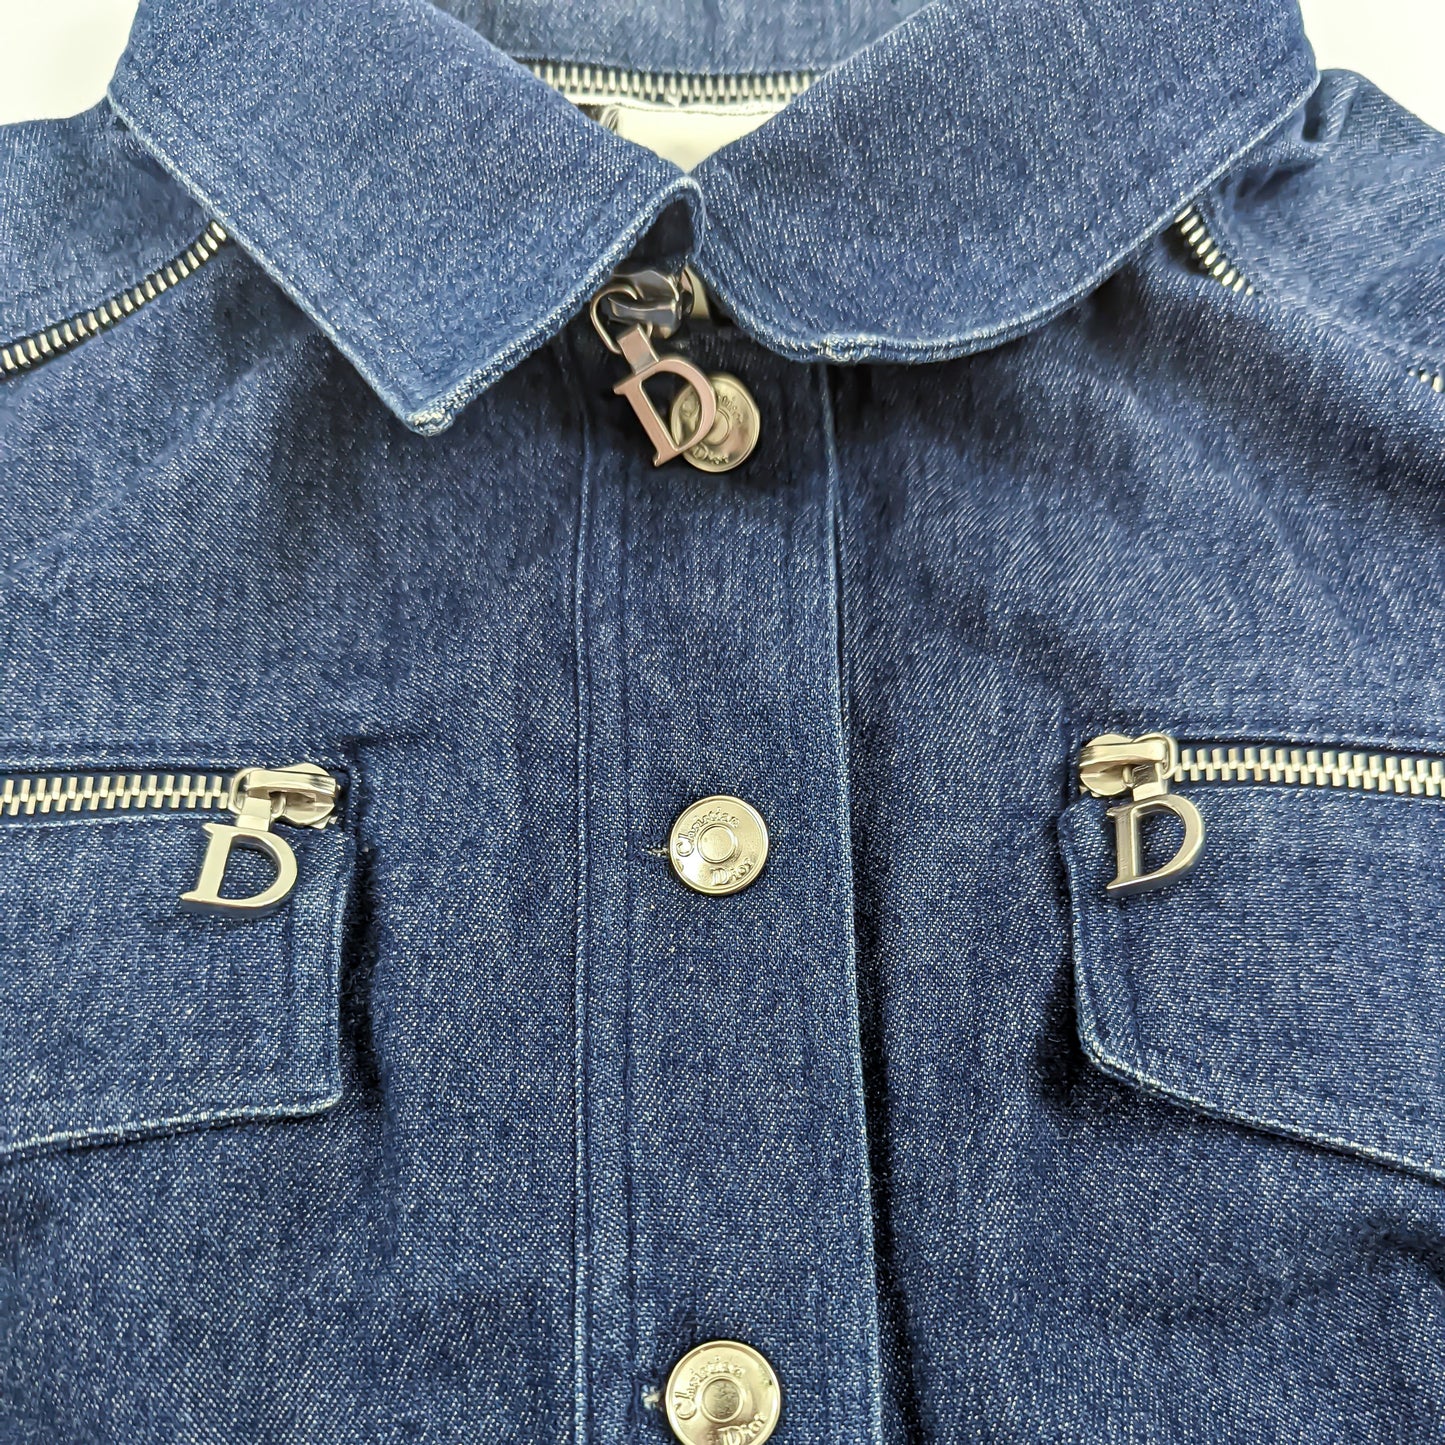 Dior denim jacket by Galliano - S/S 2001 -